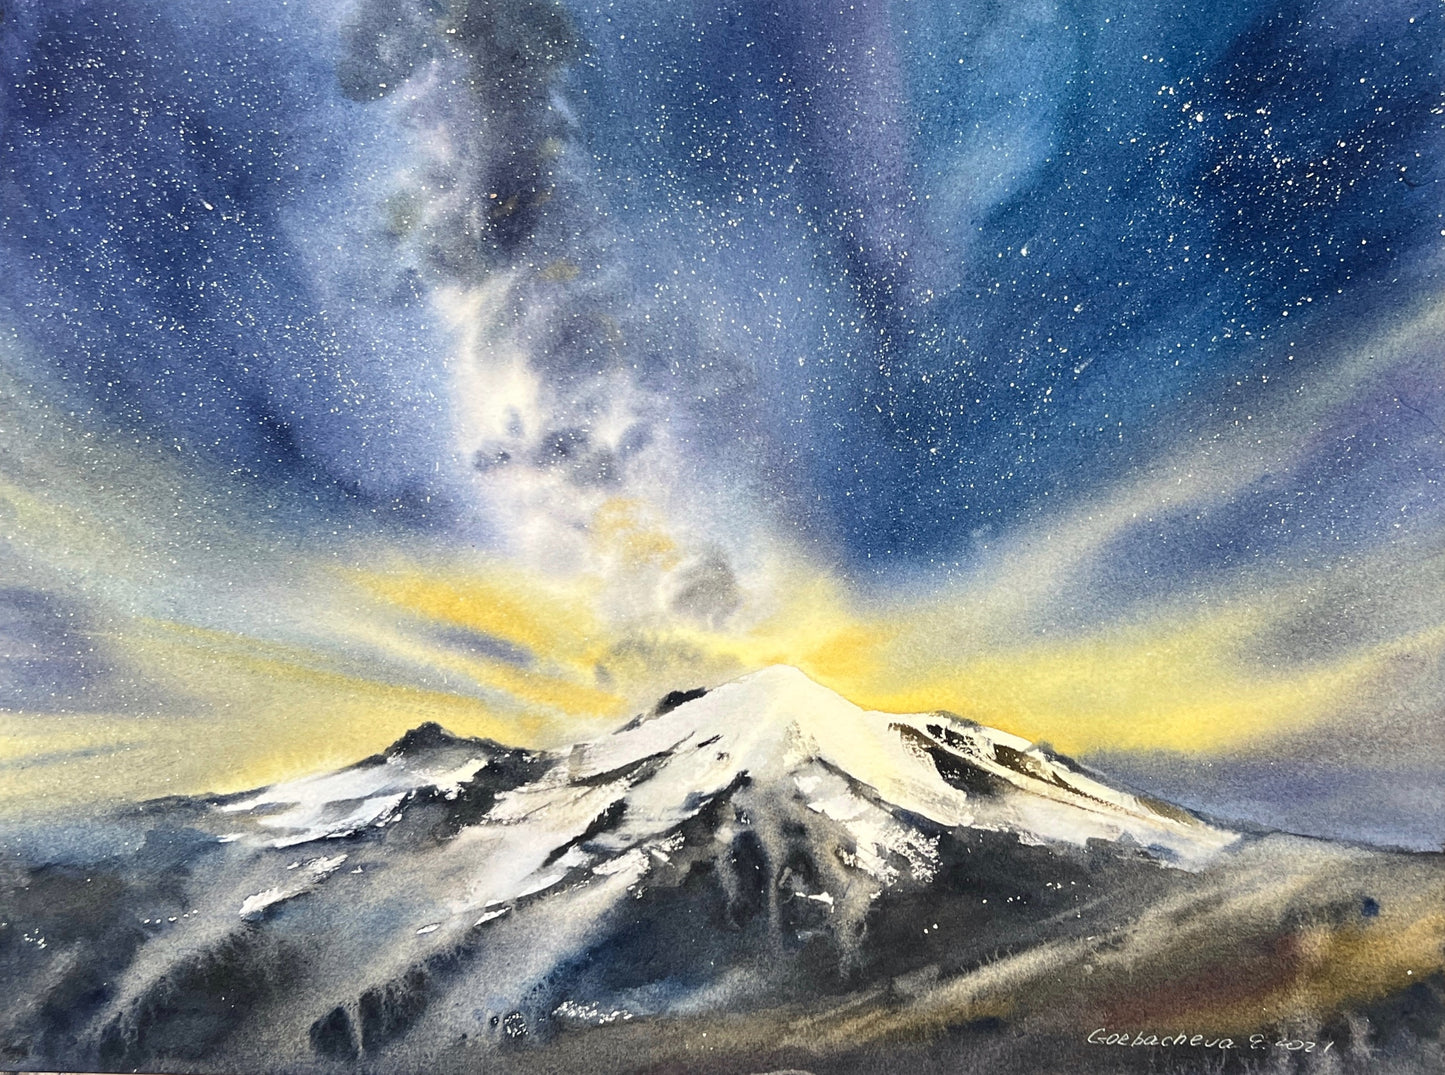 Starry Night Painting Original, Watercolor Milky Way, Mountain Art, Landscape Artwork, Galaxy Wall Decor